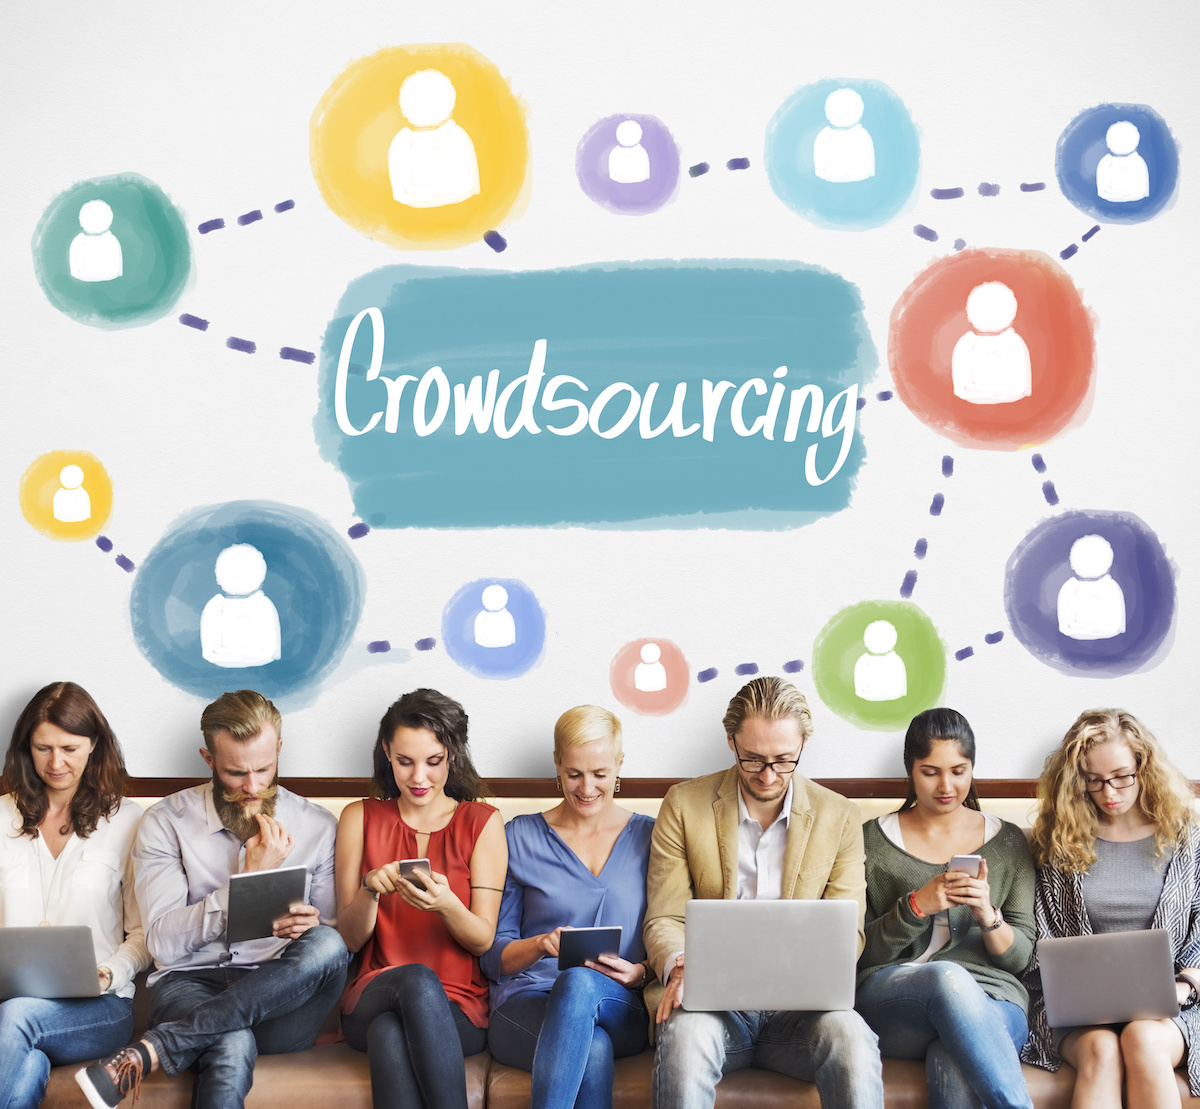 5 Tech Ideas To Help Crowdsource